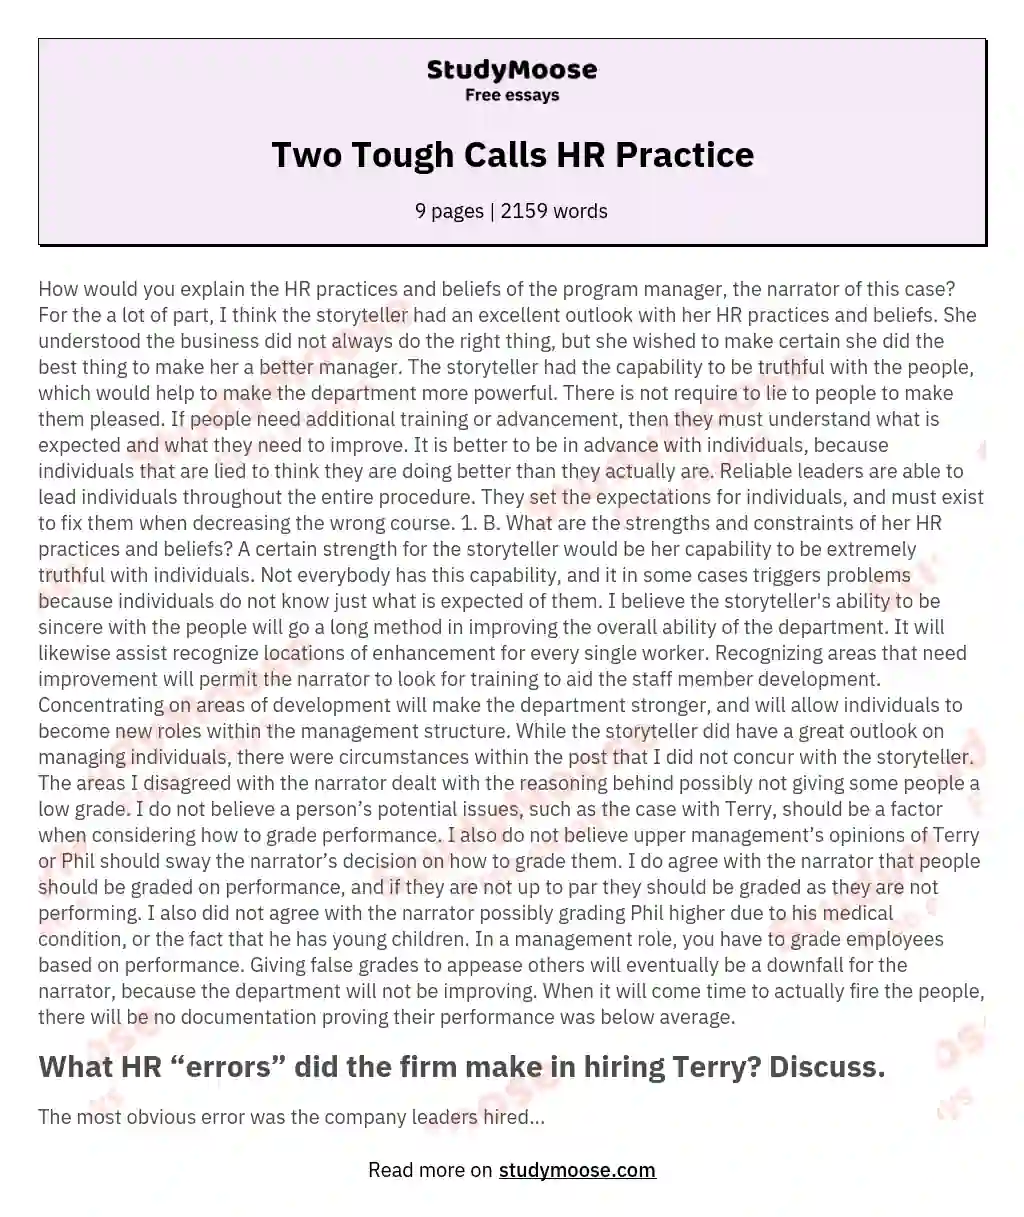 Two Tough Calls HR Practice essay